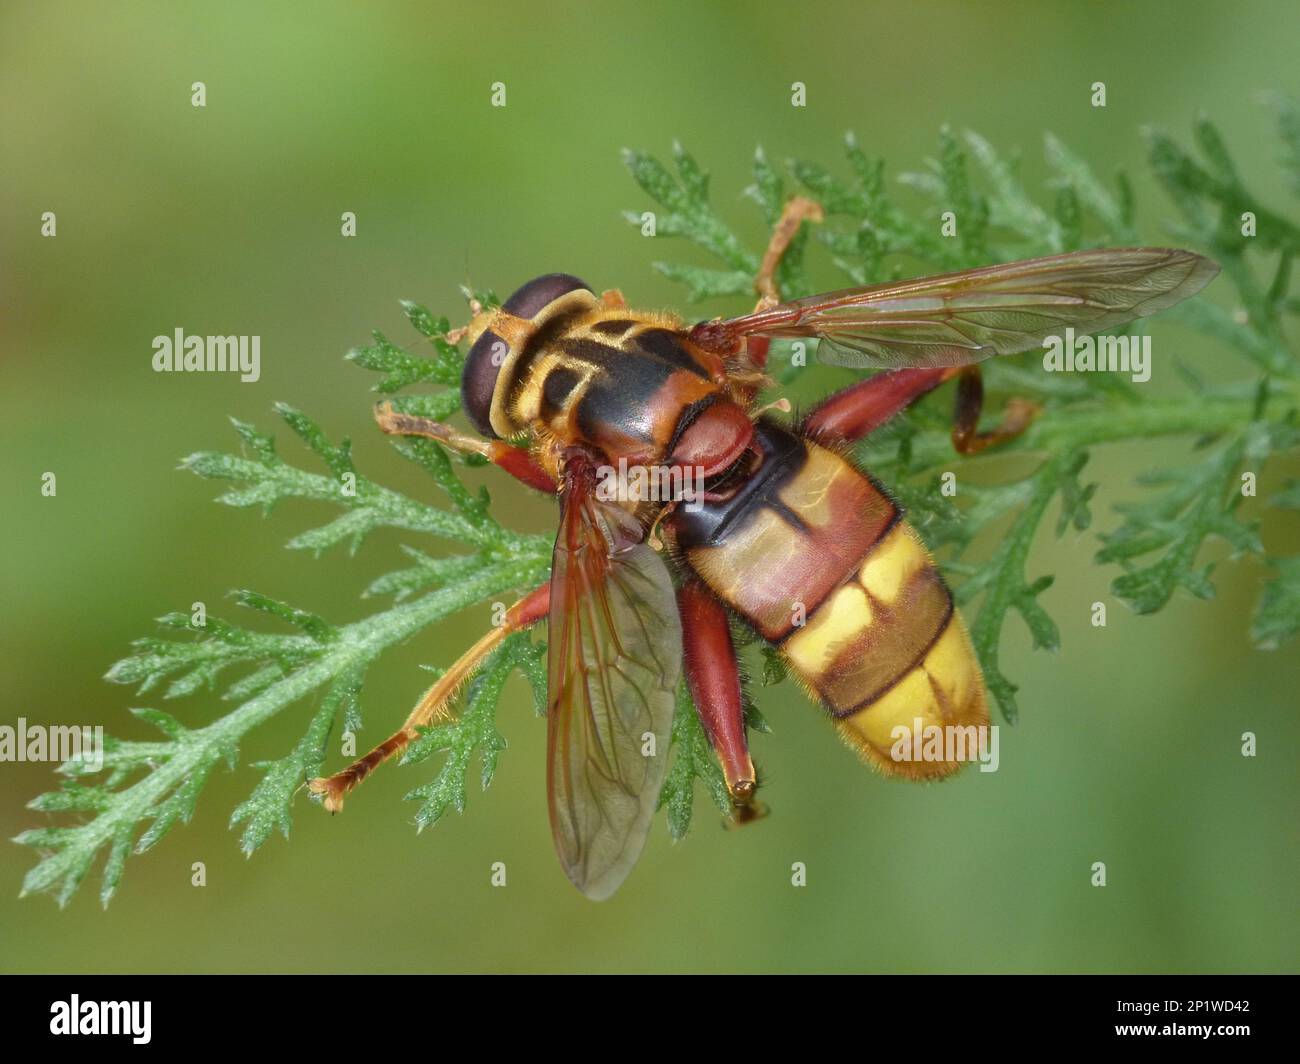 Hornet hoverfly (Milesia craboniformis) adult resting on grass, Cannobina Valley, Piedmont, Italian Alps, August 2015 Stock Photo